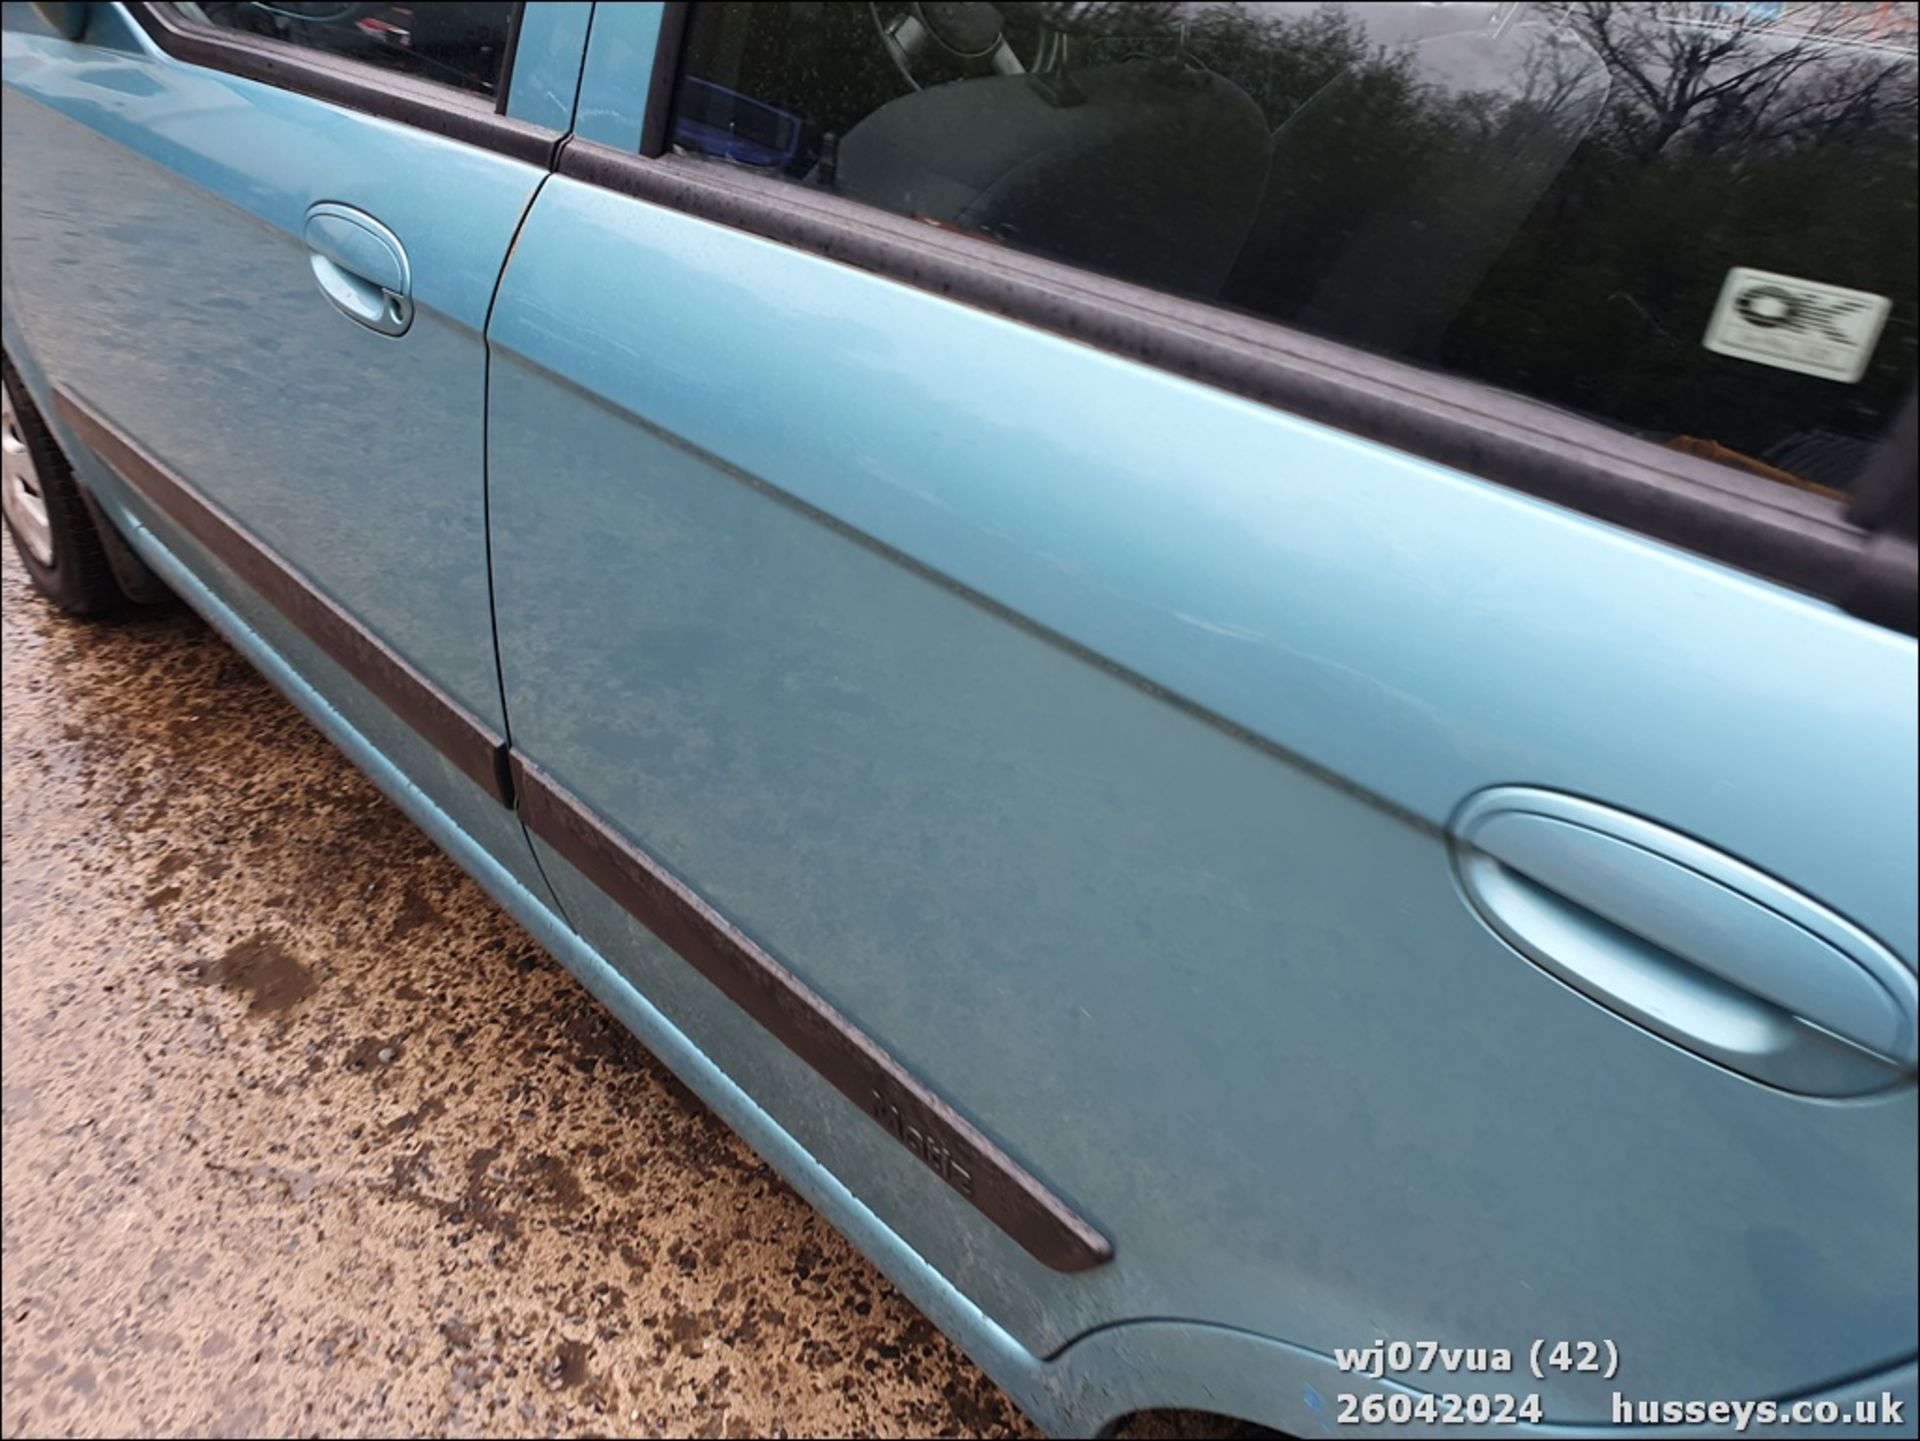 07/07 CHEVROLET MATIZ SE AUTO - 796cc 5dr Hatchback (Blue, 36k) - Image 43 of 56